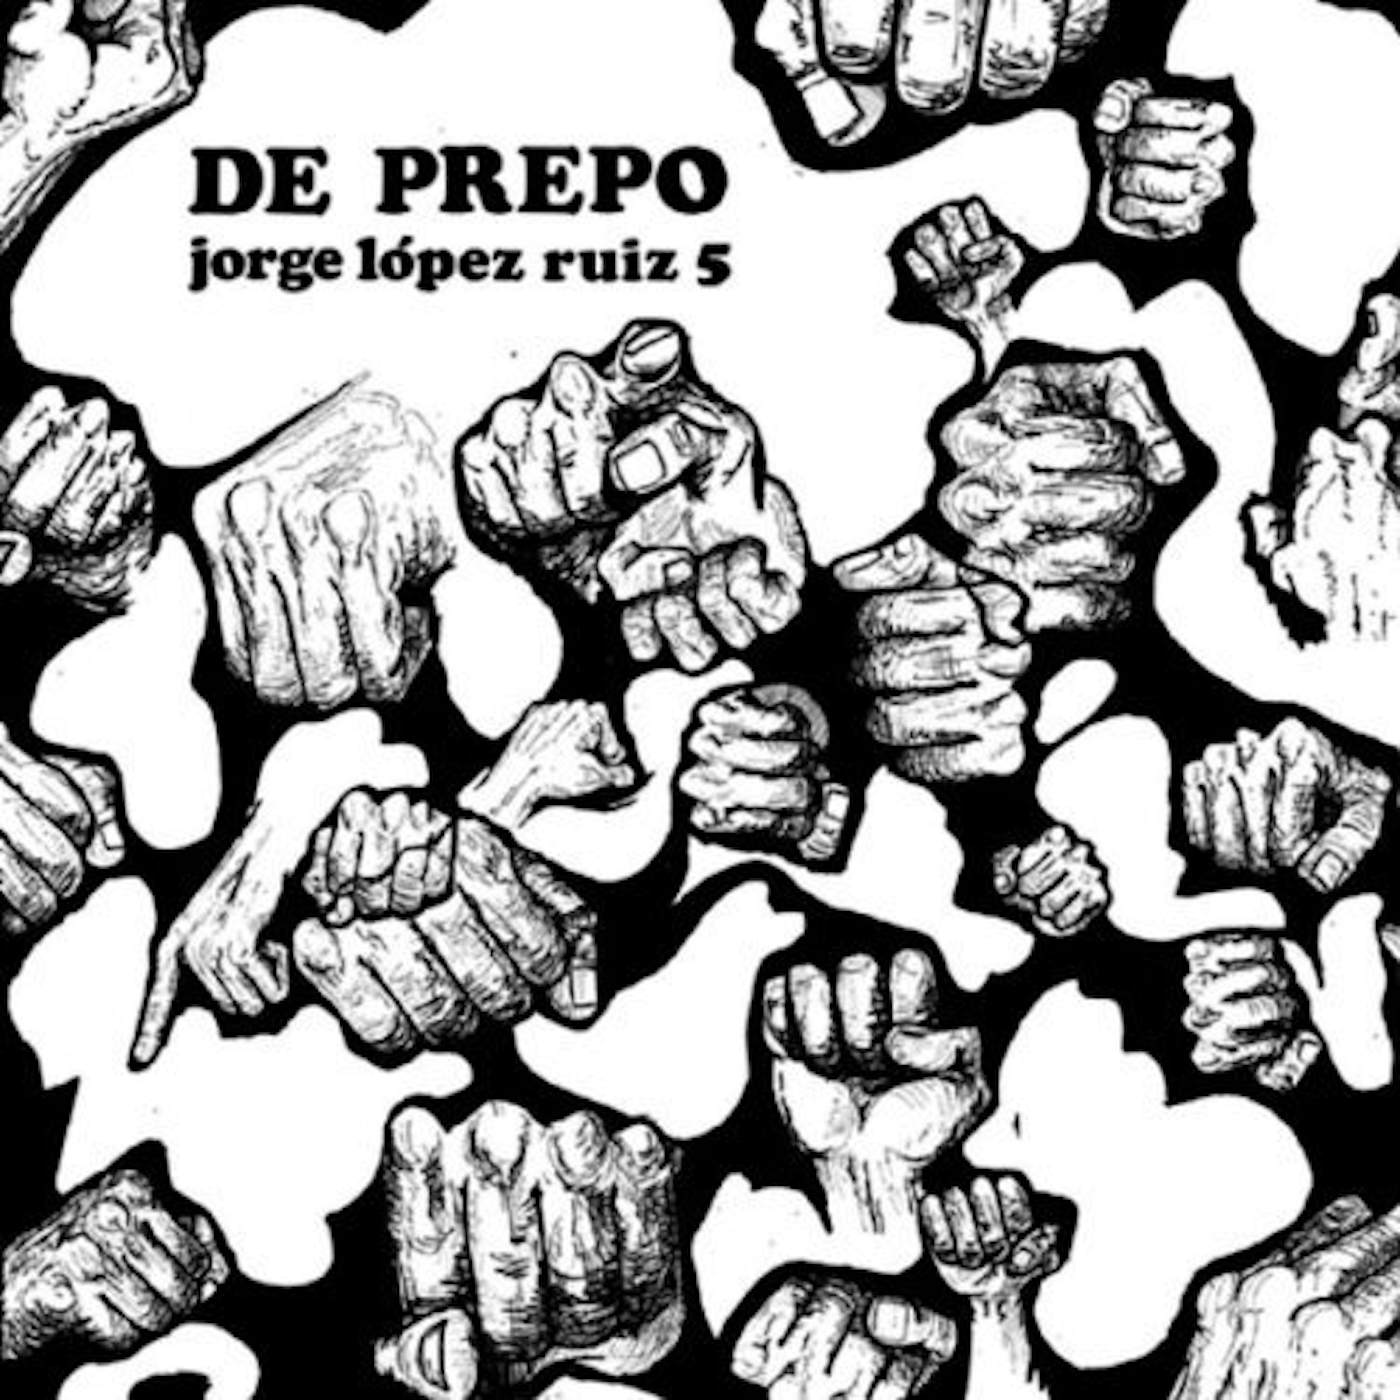 Jorge López Ruiz De Prepo Vinyl Record